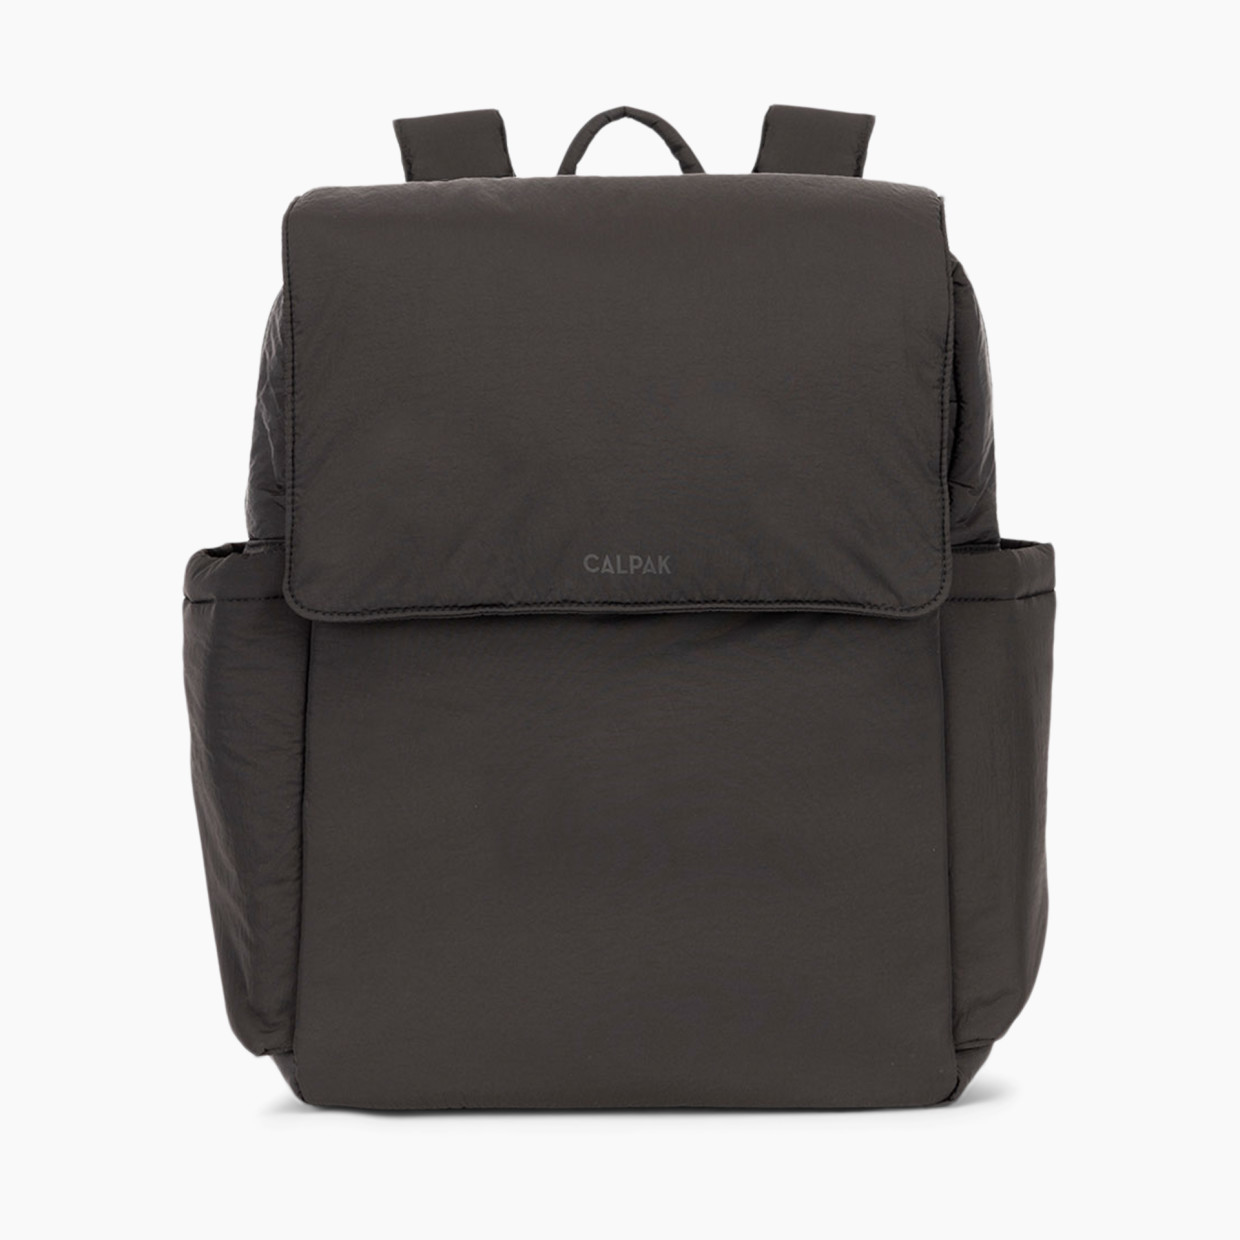 CALPAK Diaper Backpack with Laptop Sleeve - Black.